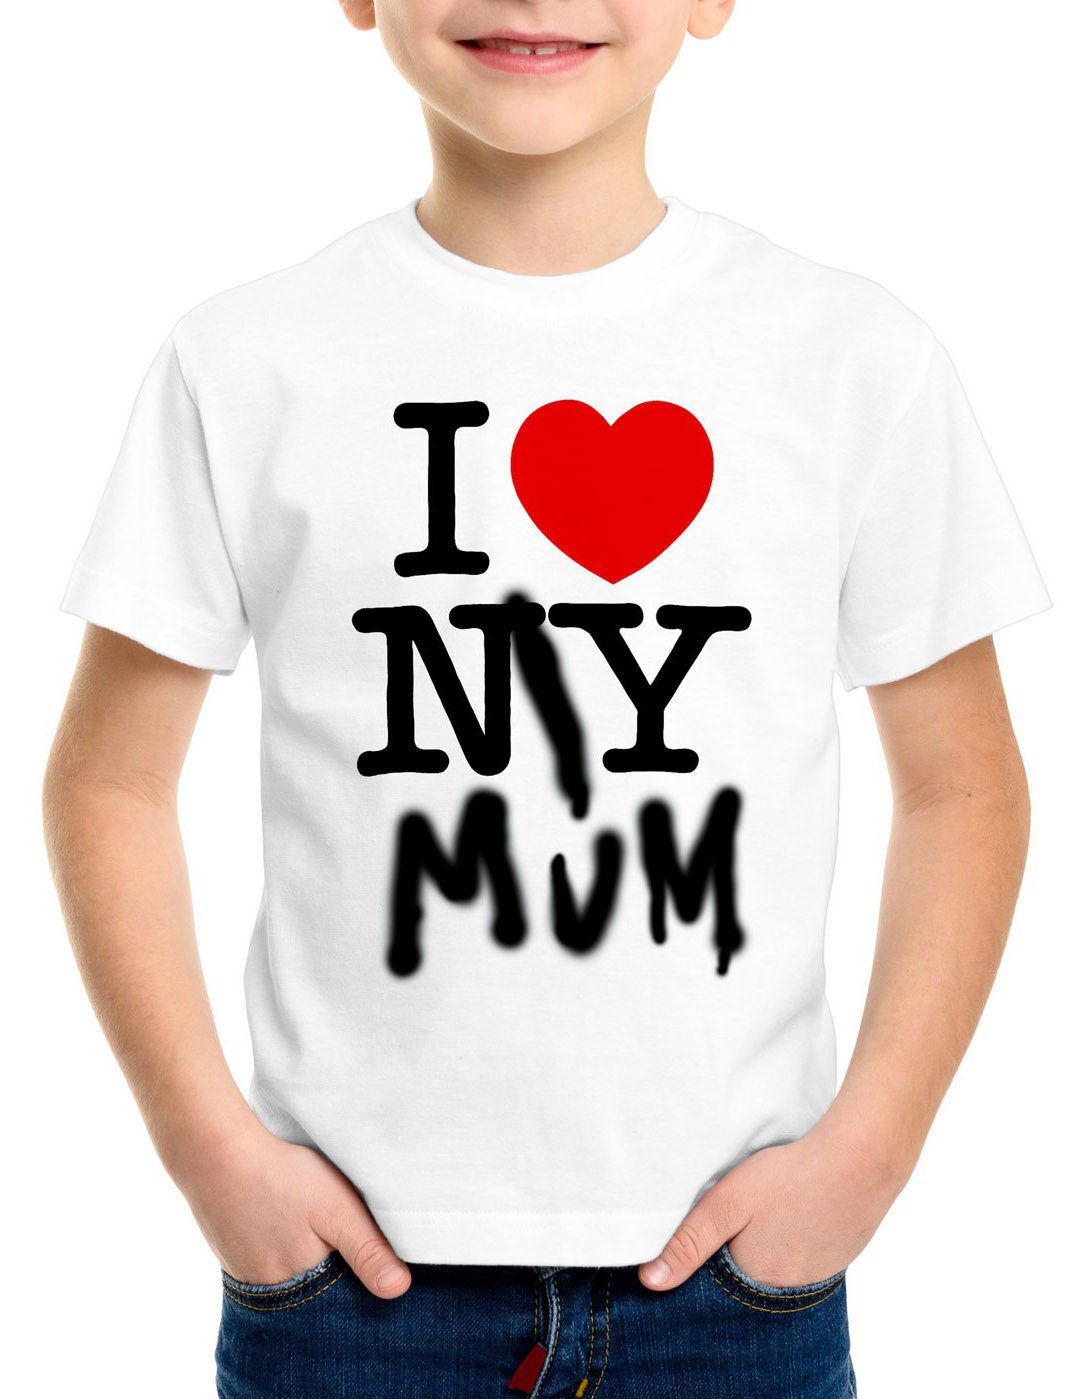 usa T-Shirt Love Print-Shirt amerika Mum muttertag herz Kinder new I ny york style3 My